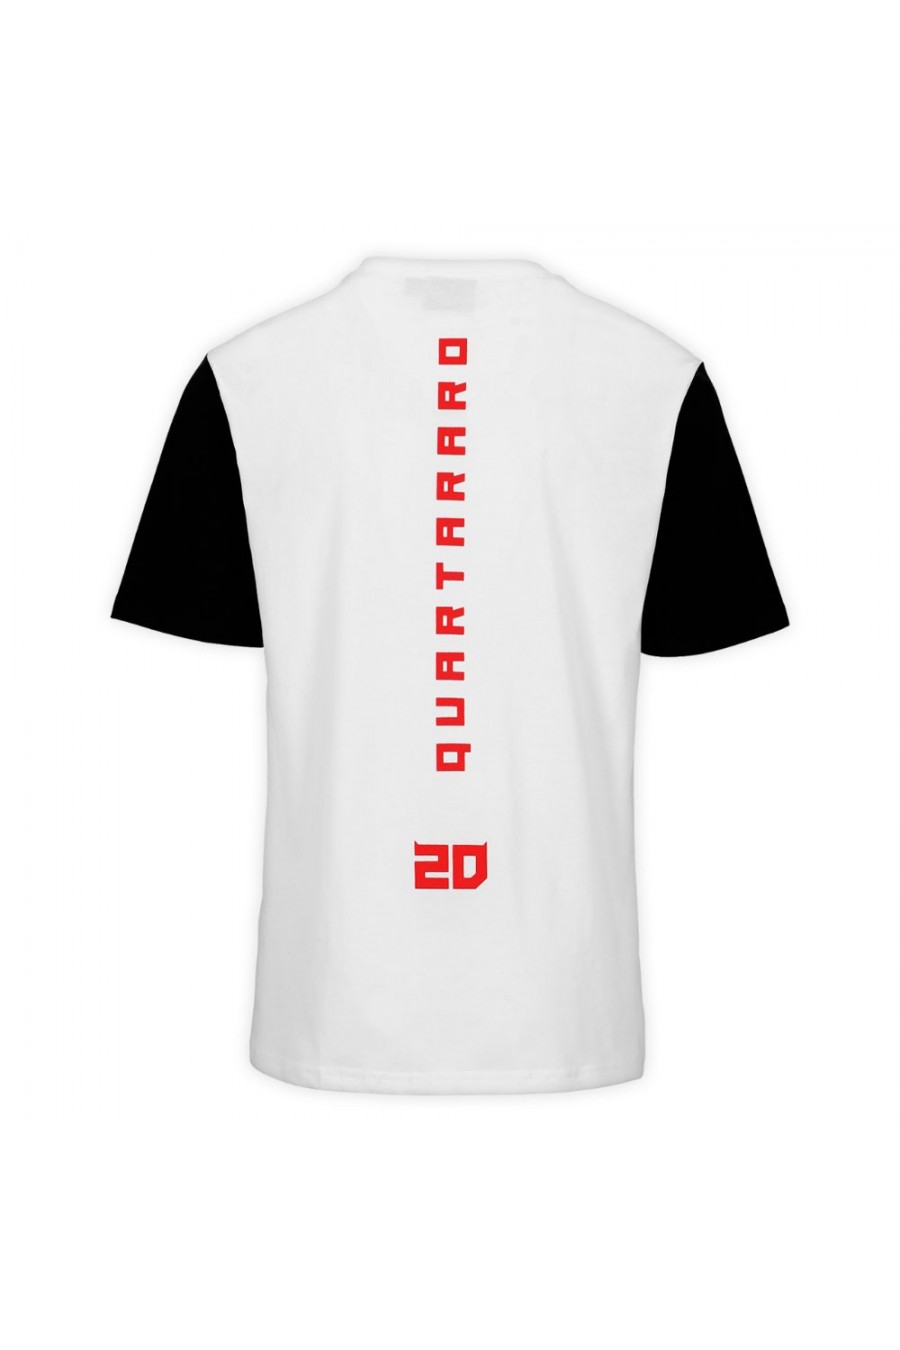 Fabio Quartararo 20 Cyber Weißes T-Shirt